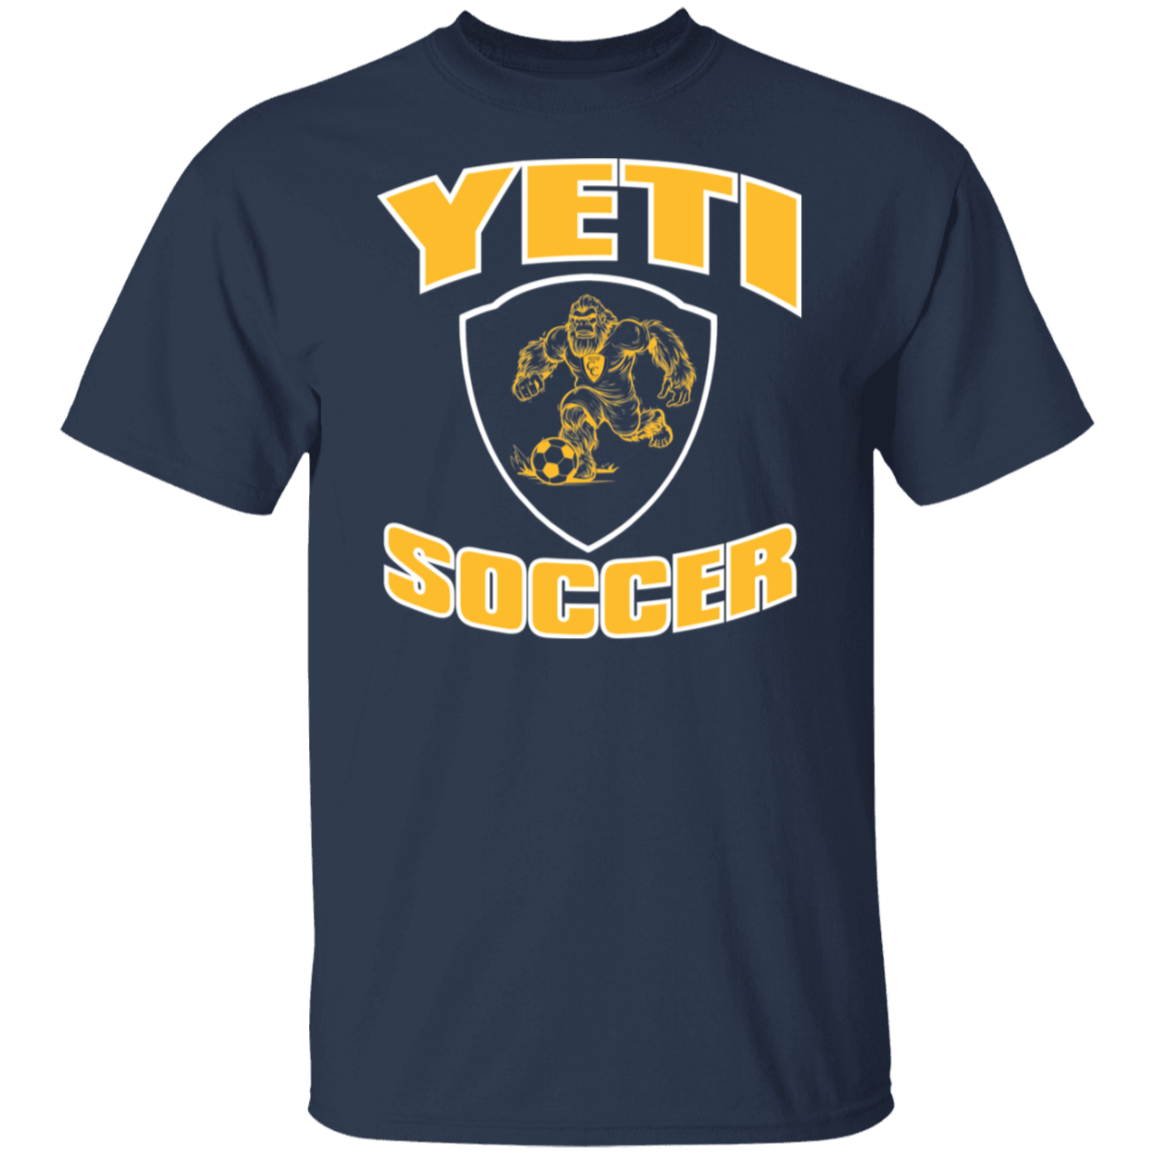 Yeti Soccer Navy Blue T-Shirt